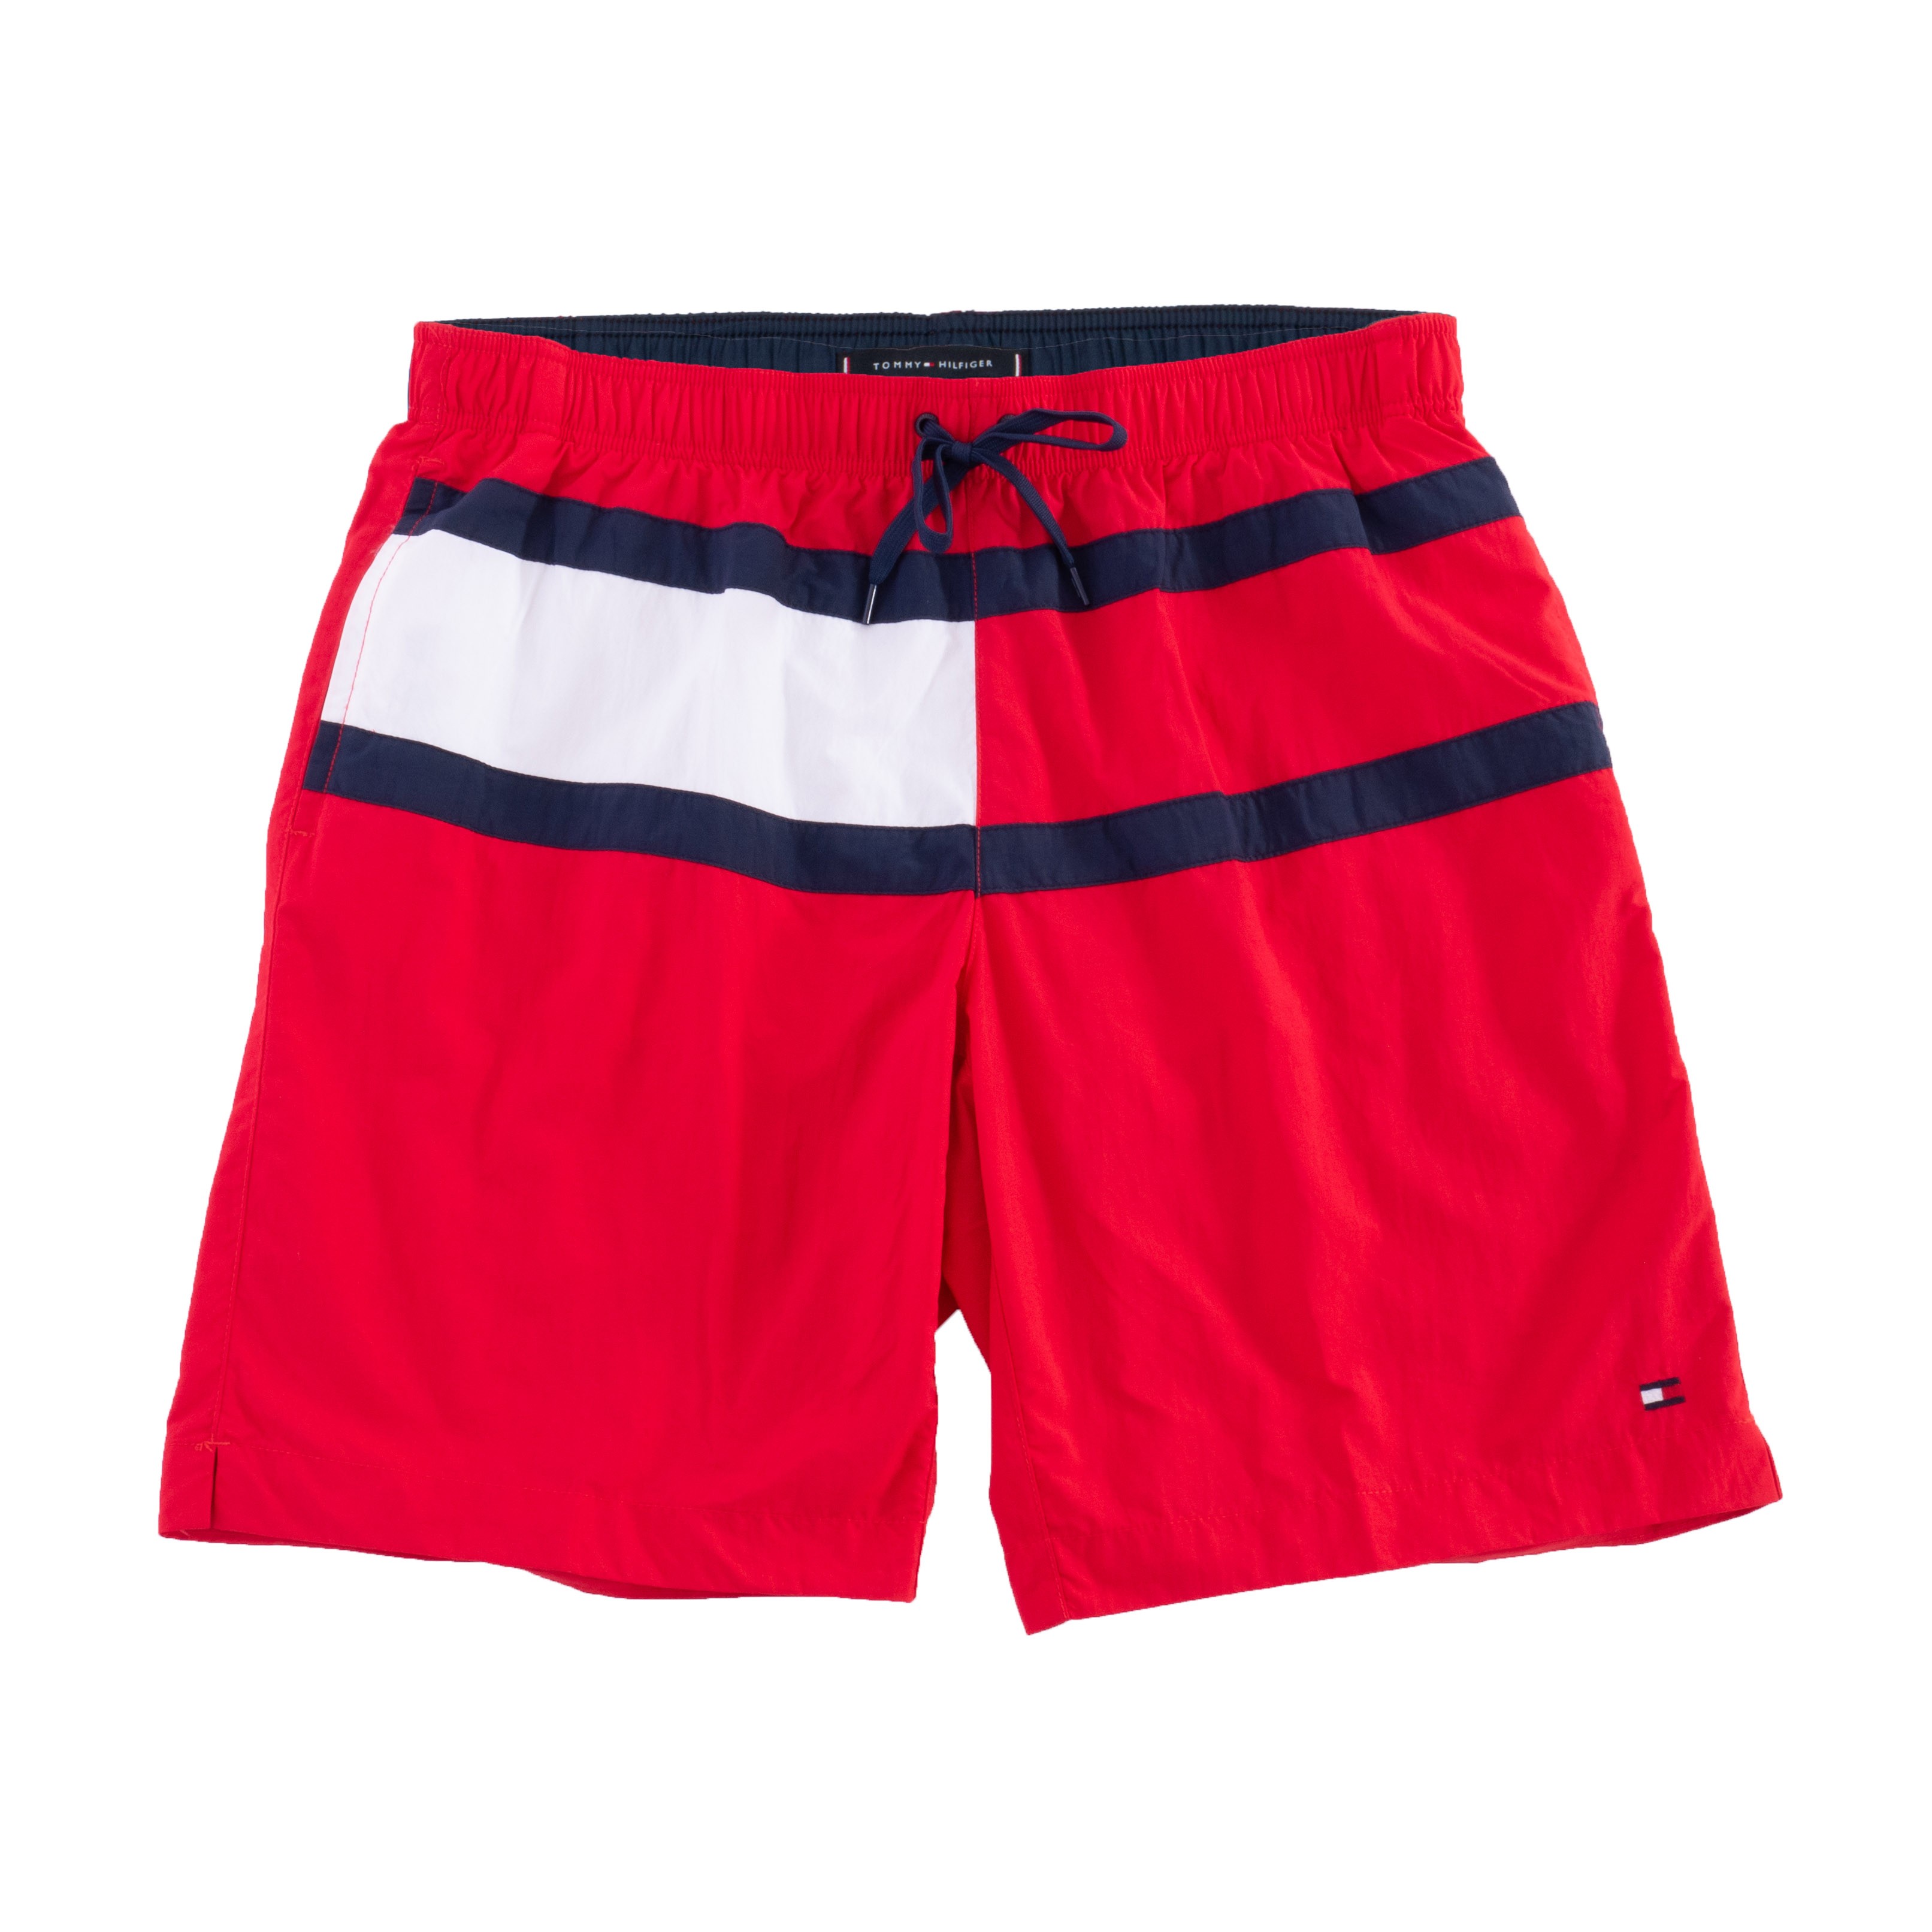 https://www.luniversdelhomme.com/57351/large-size-swim-shorts-tommy-medium-drawstring-flag-red.jpg